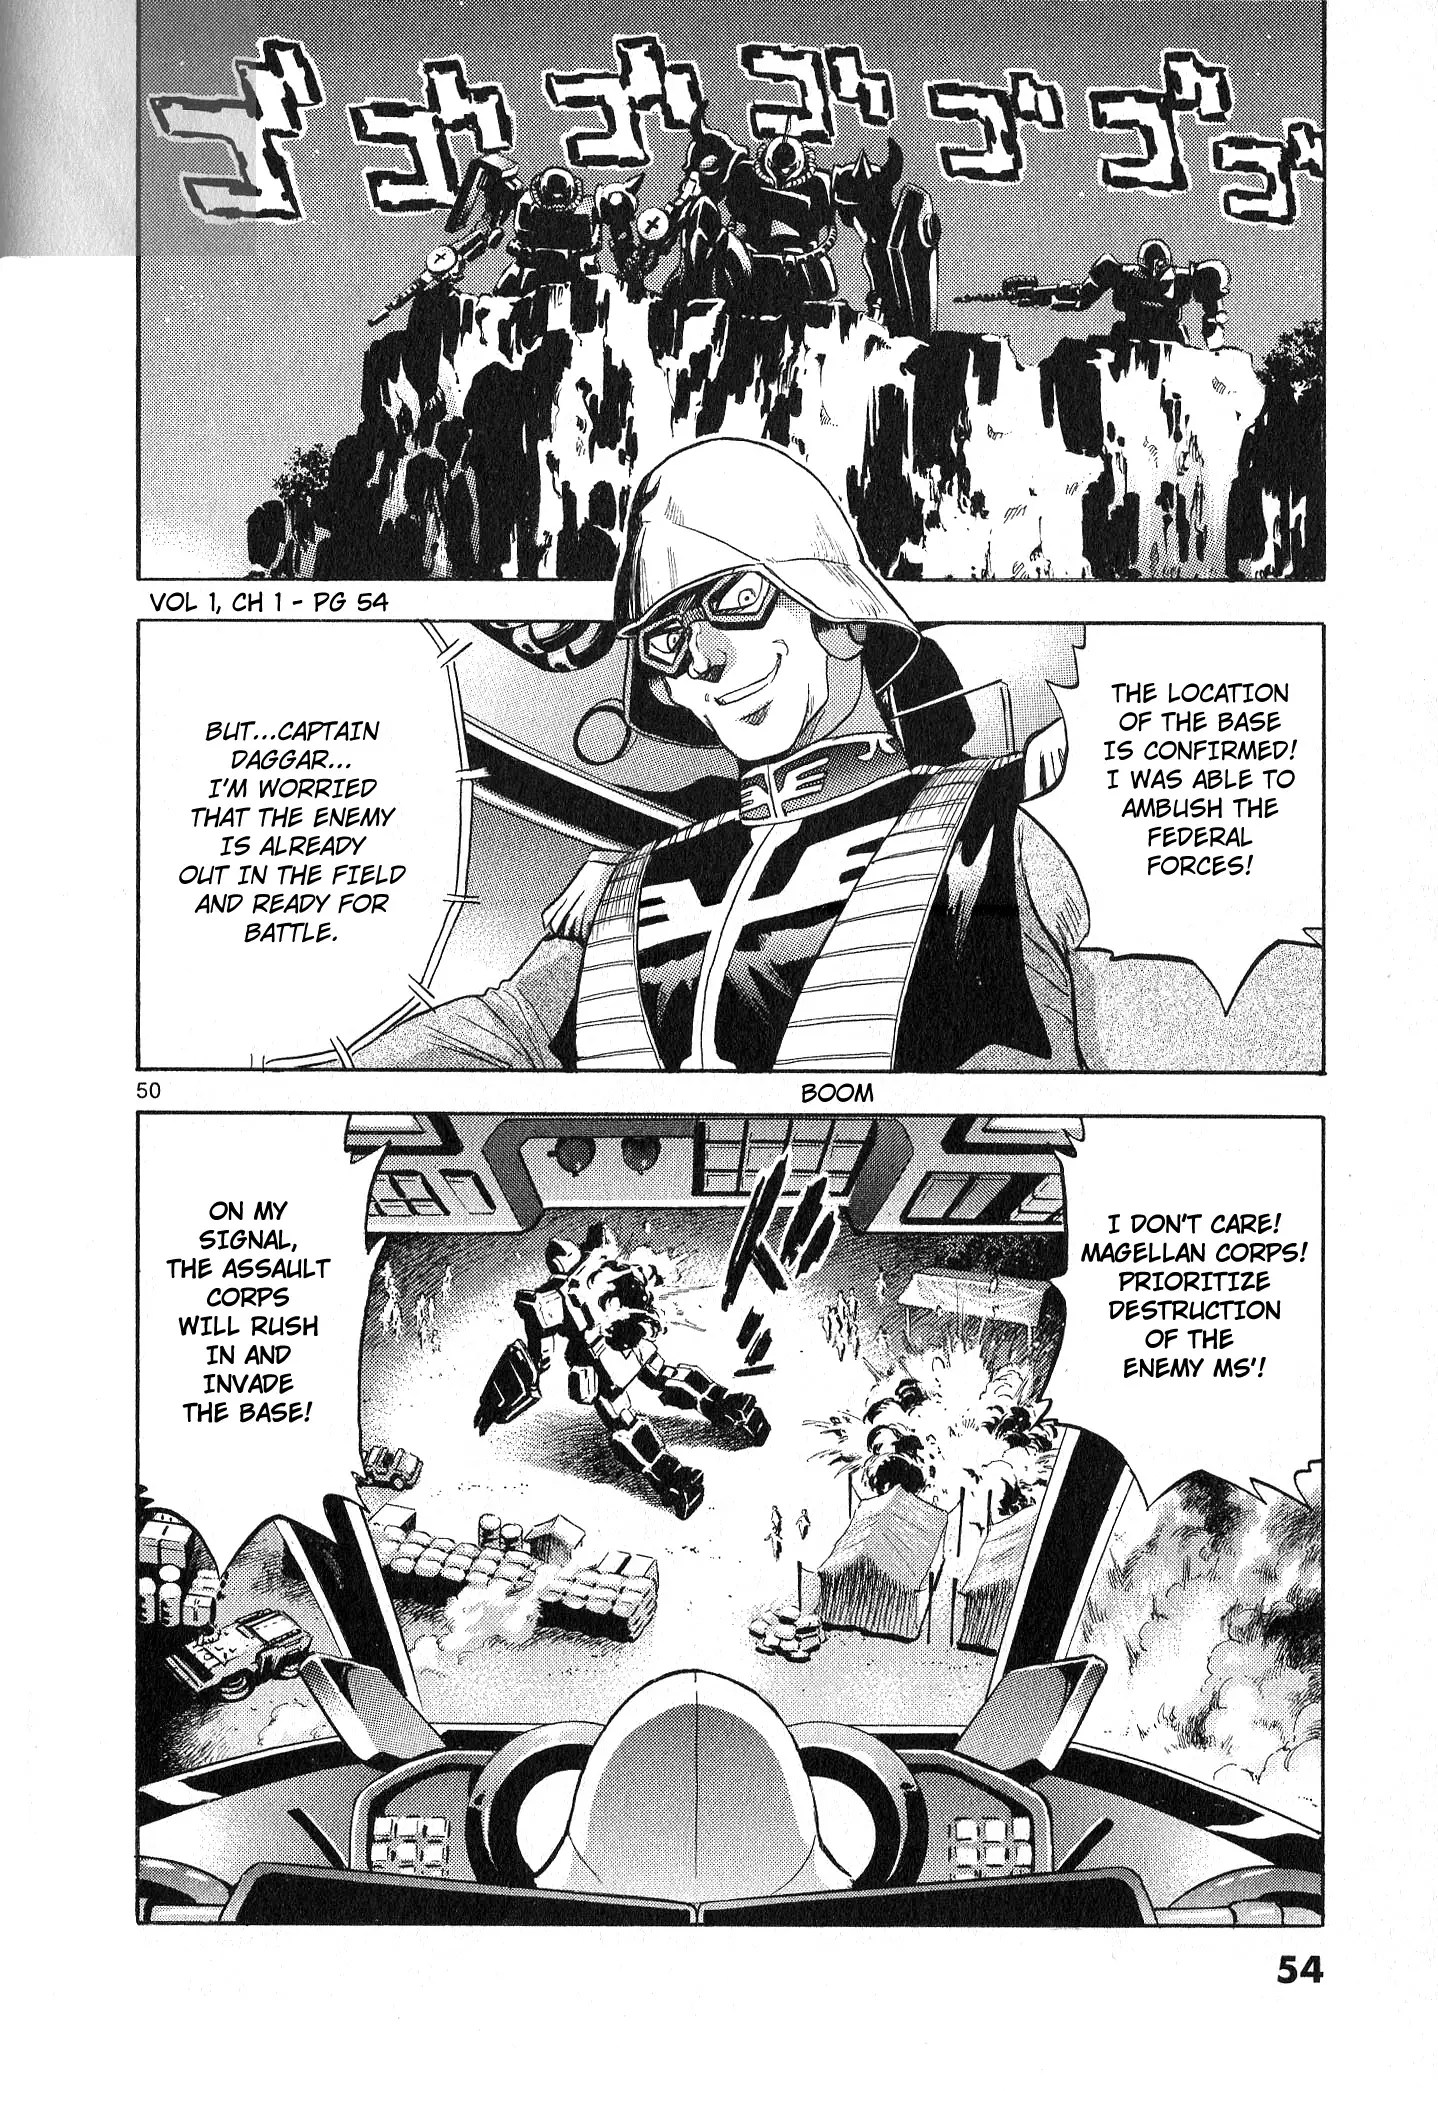 Mobile Suit Gundam Aggressor - 1 page 50-019c2d51